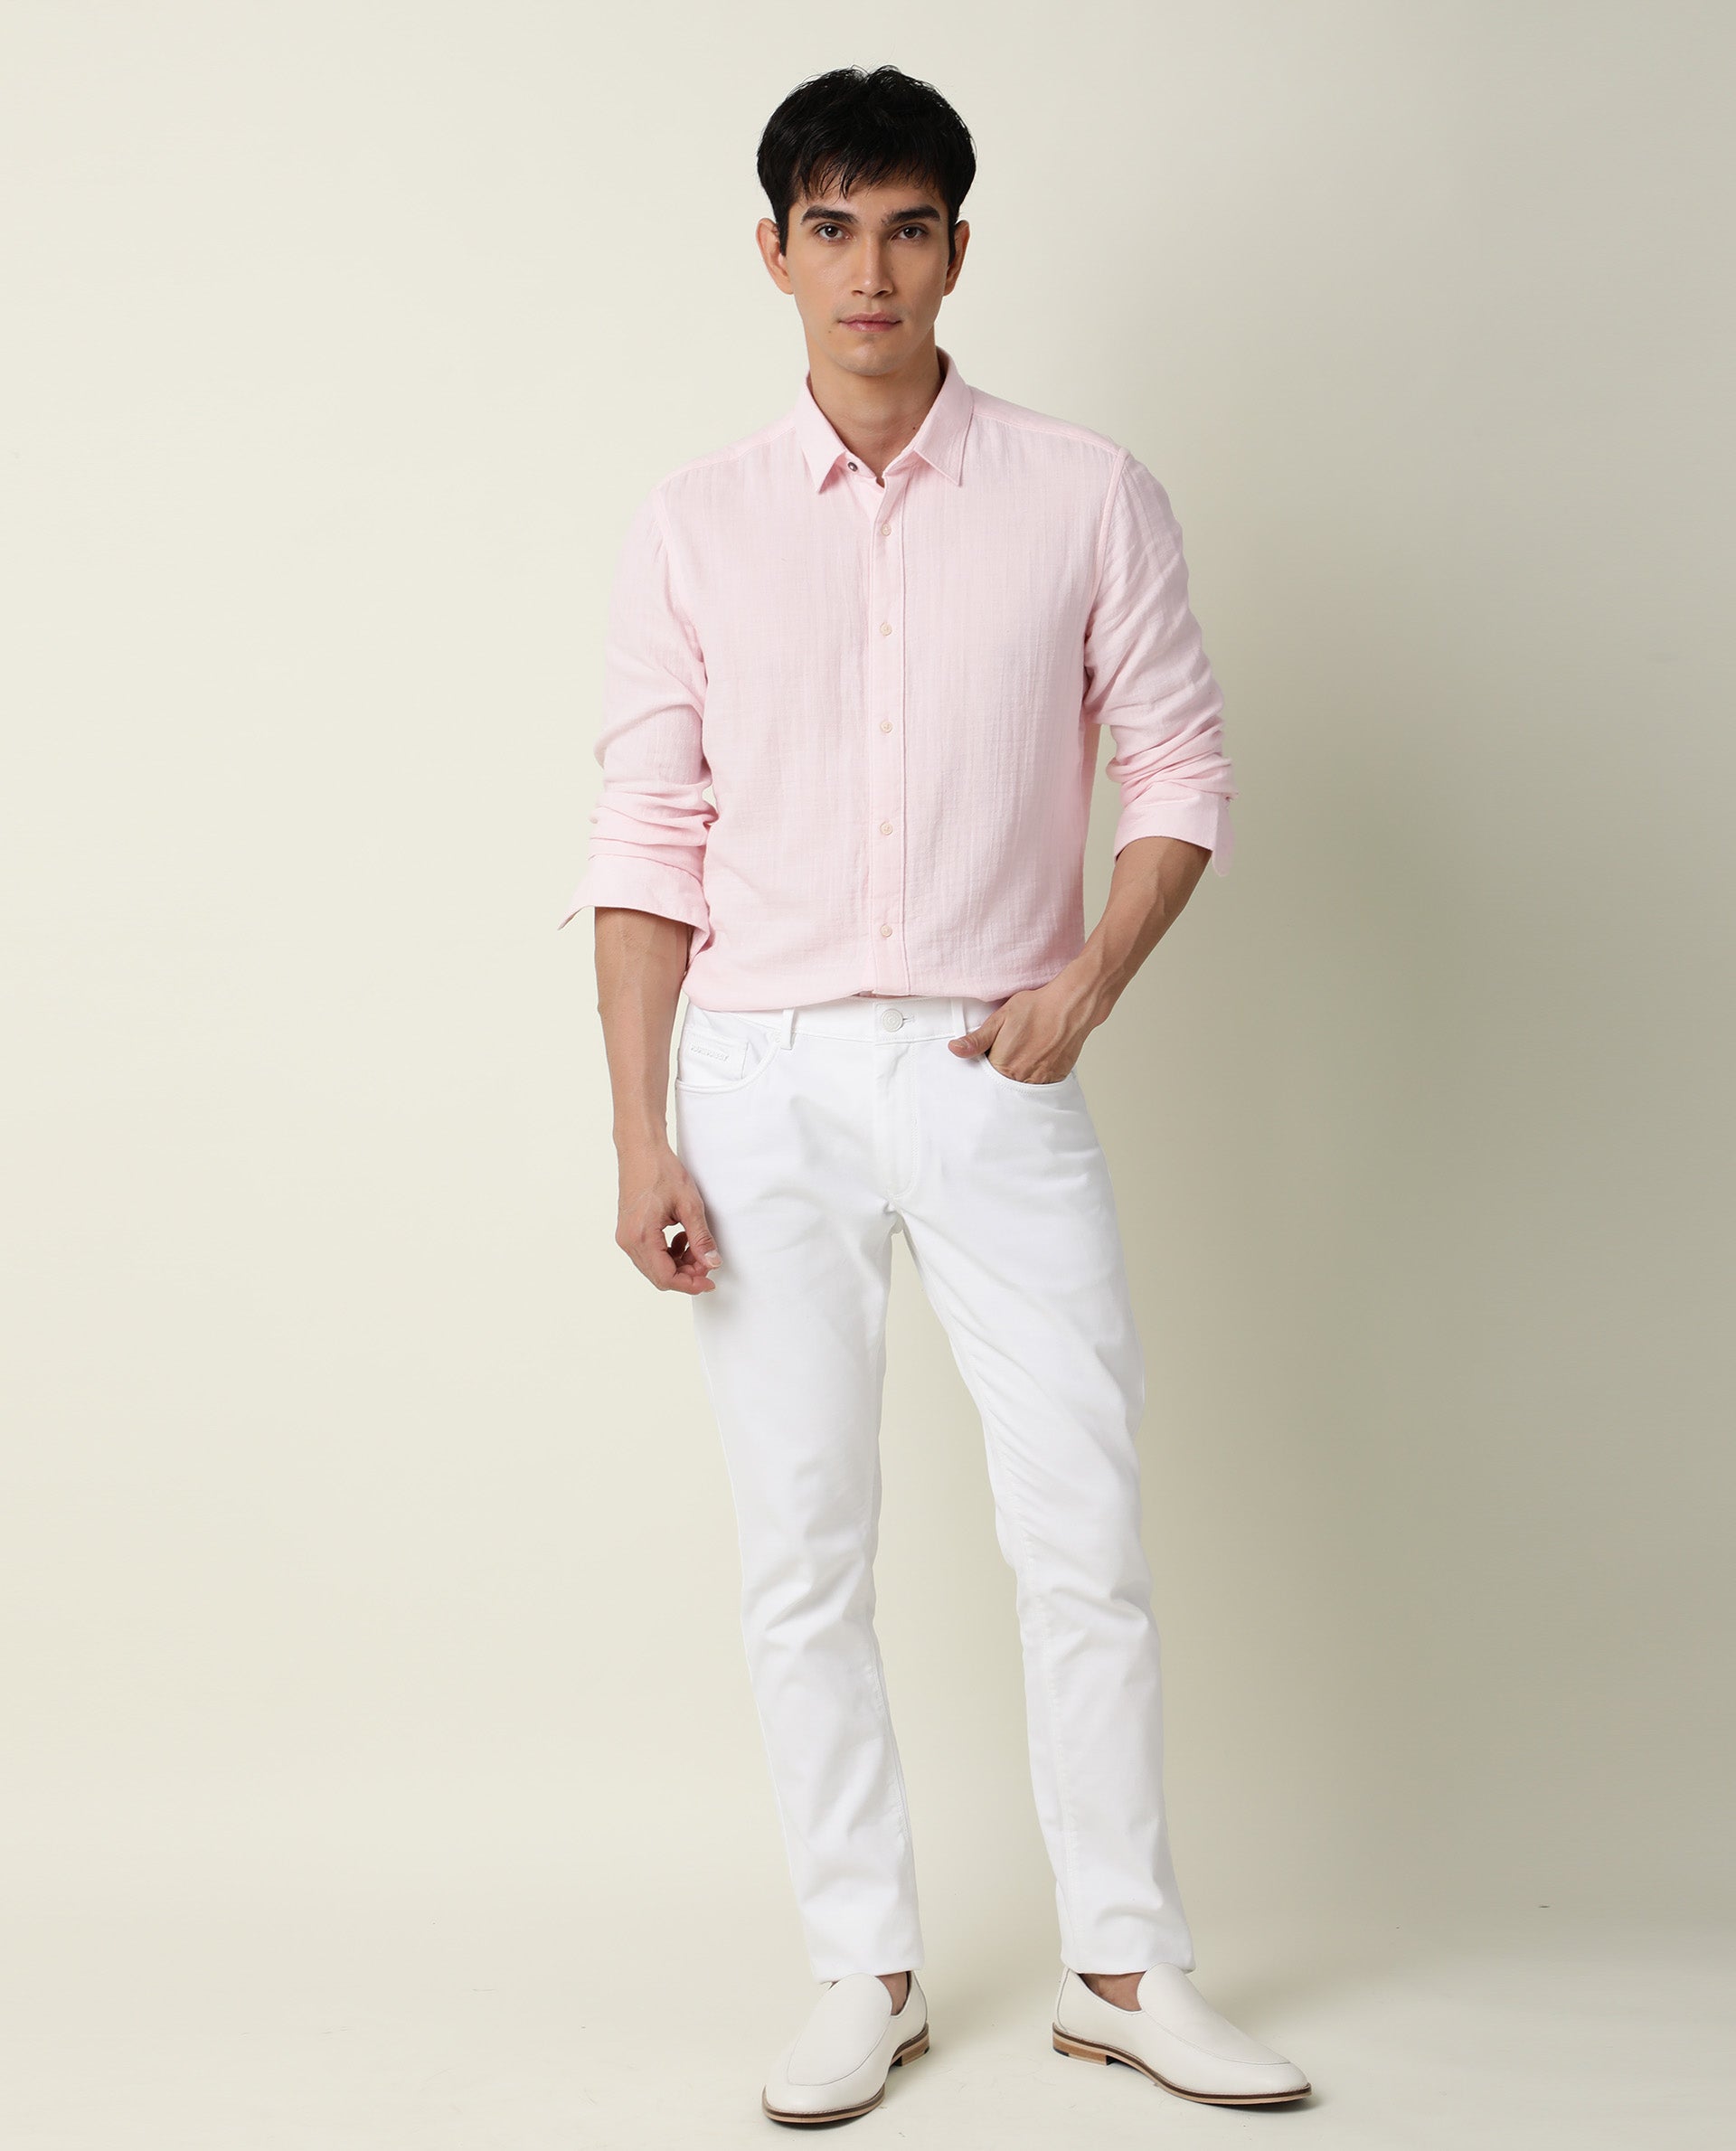 Blonde Girl Pink Tshirt White Pants Stock Photo 1501043141 | Shutterstock